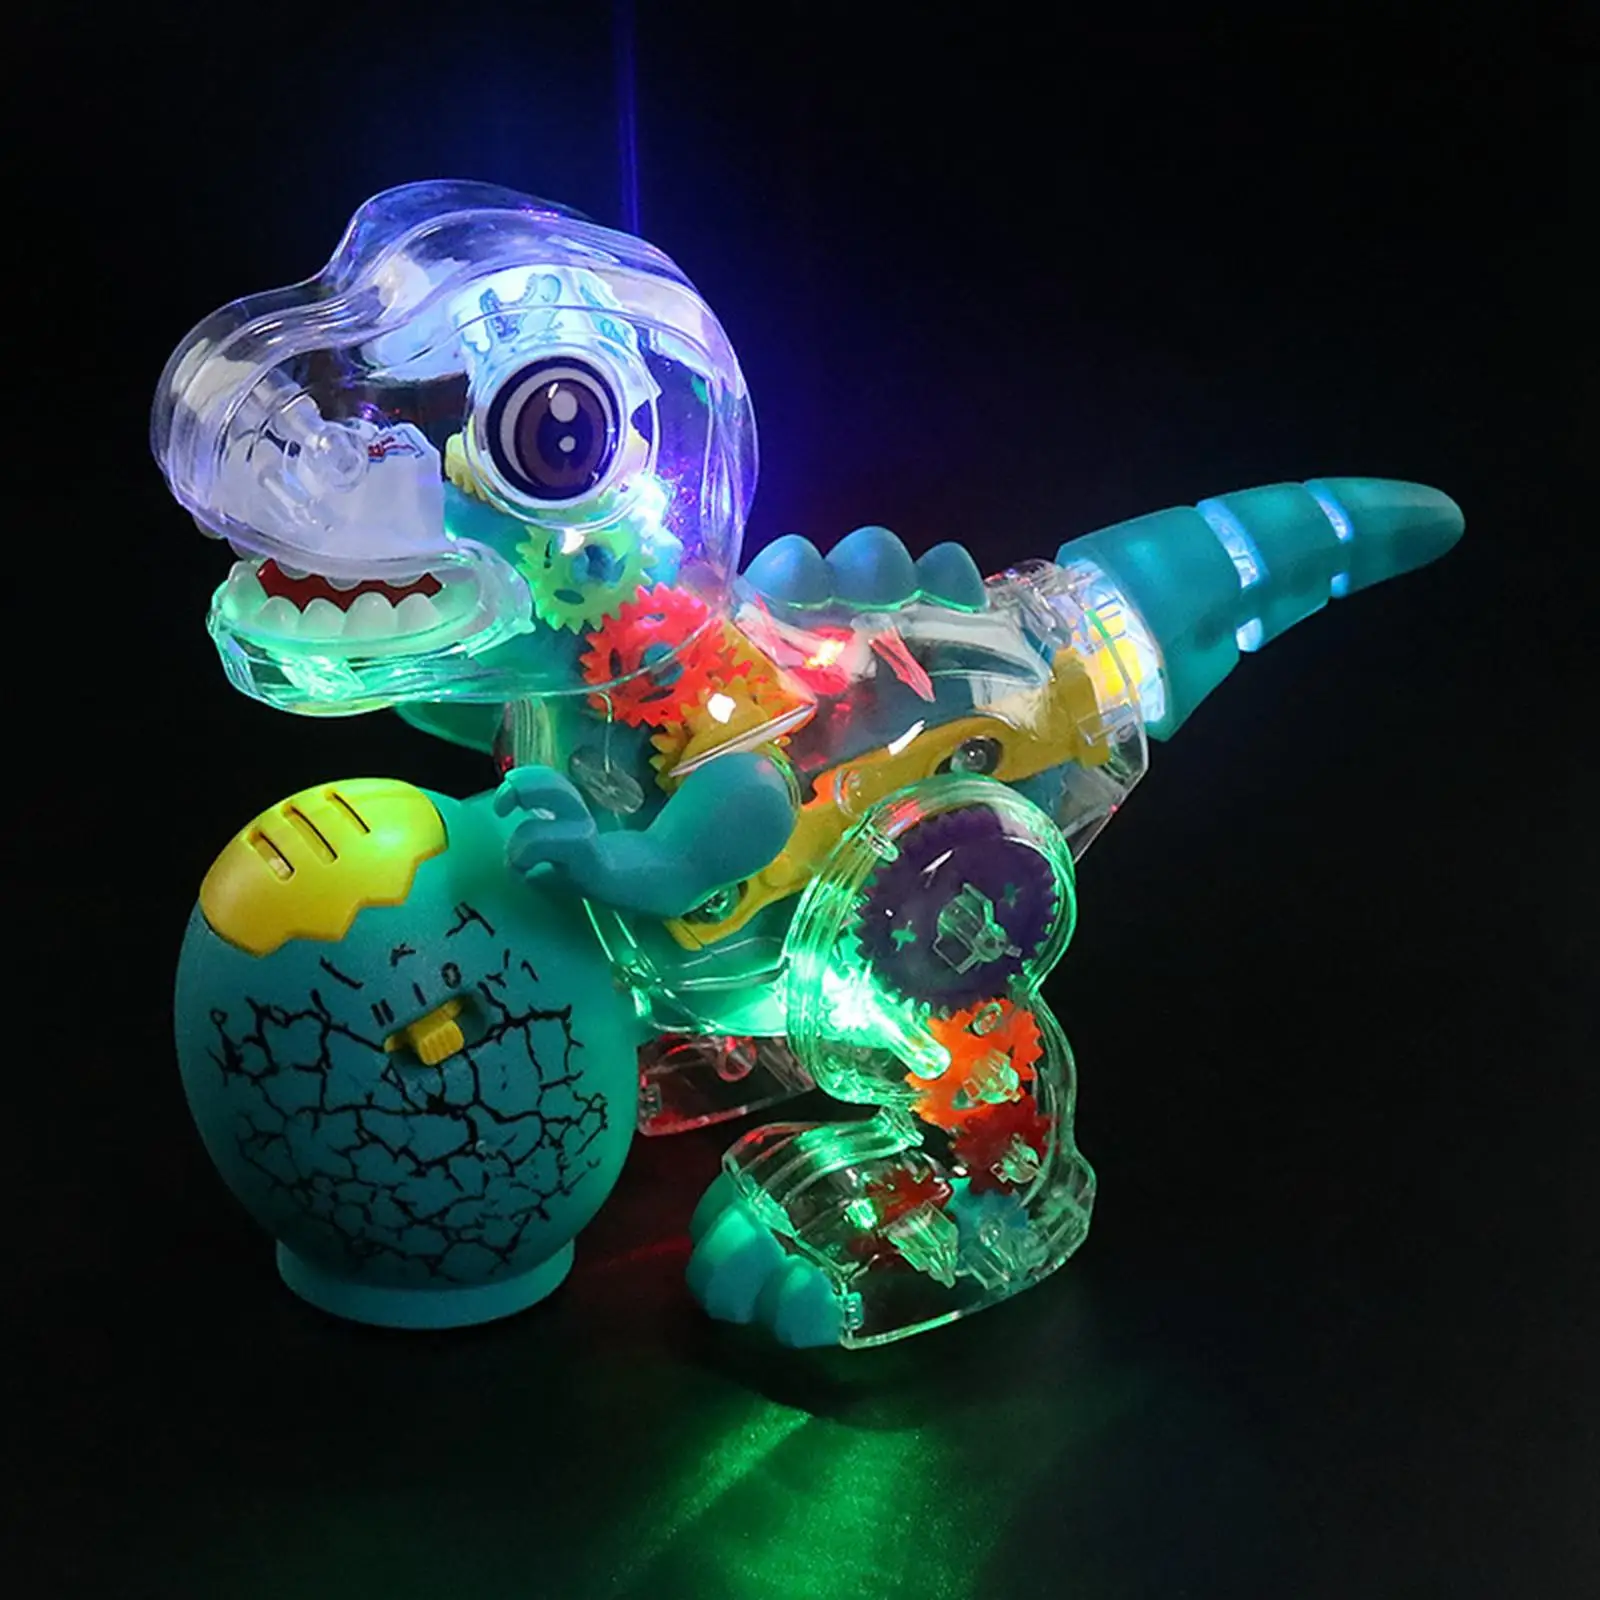 Electric Dinosaur Toy Halloween Lighting Toddlers Building Preschool Toy